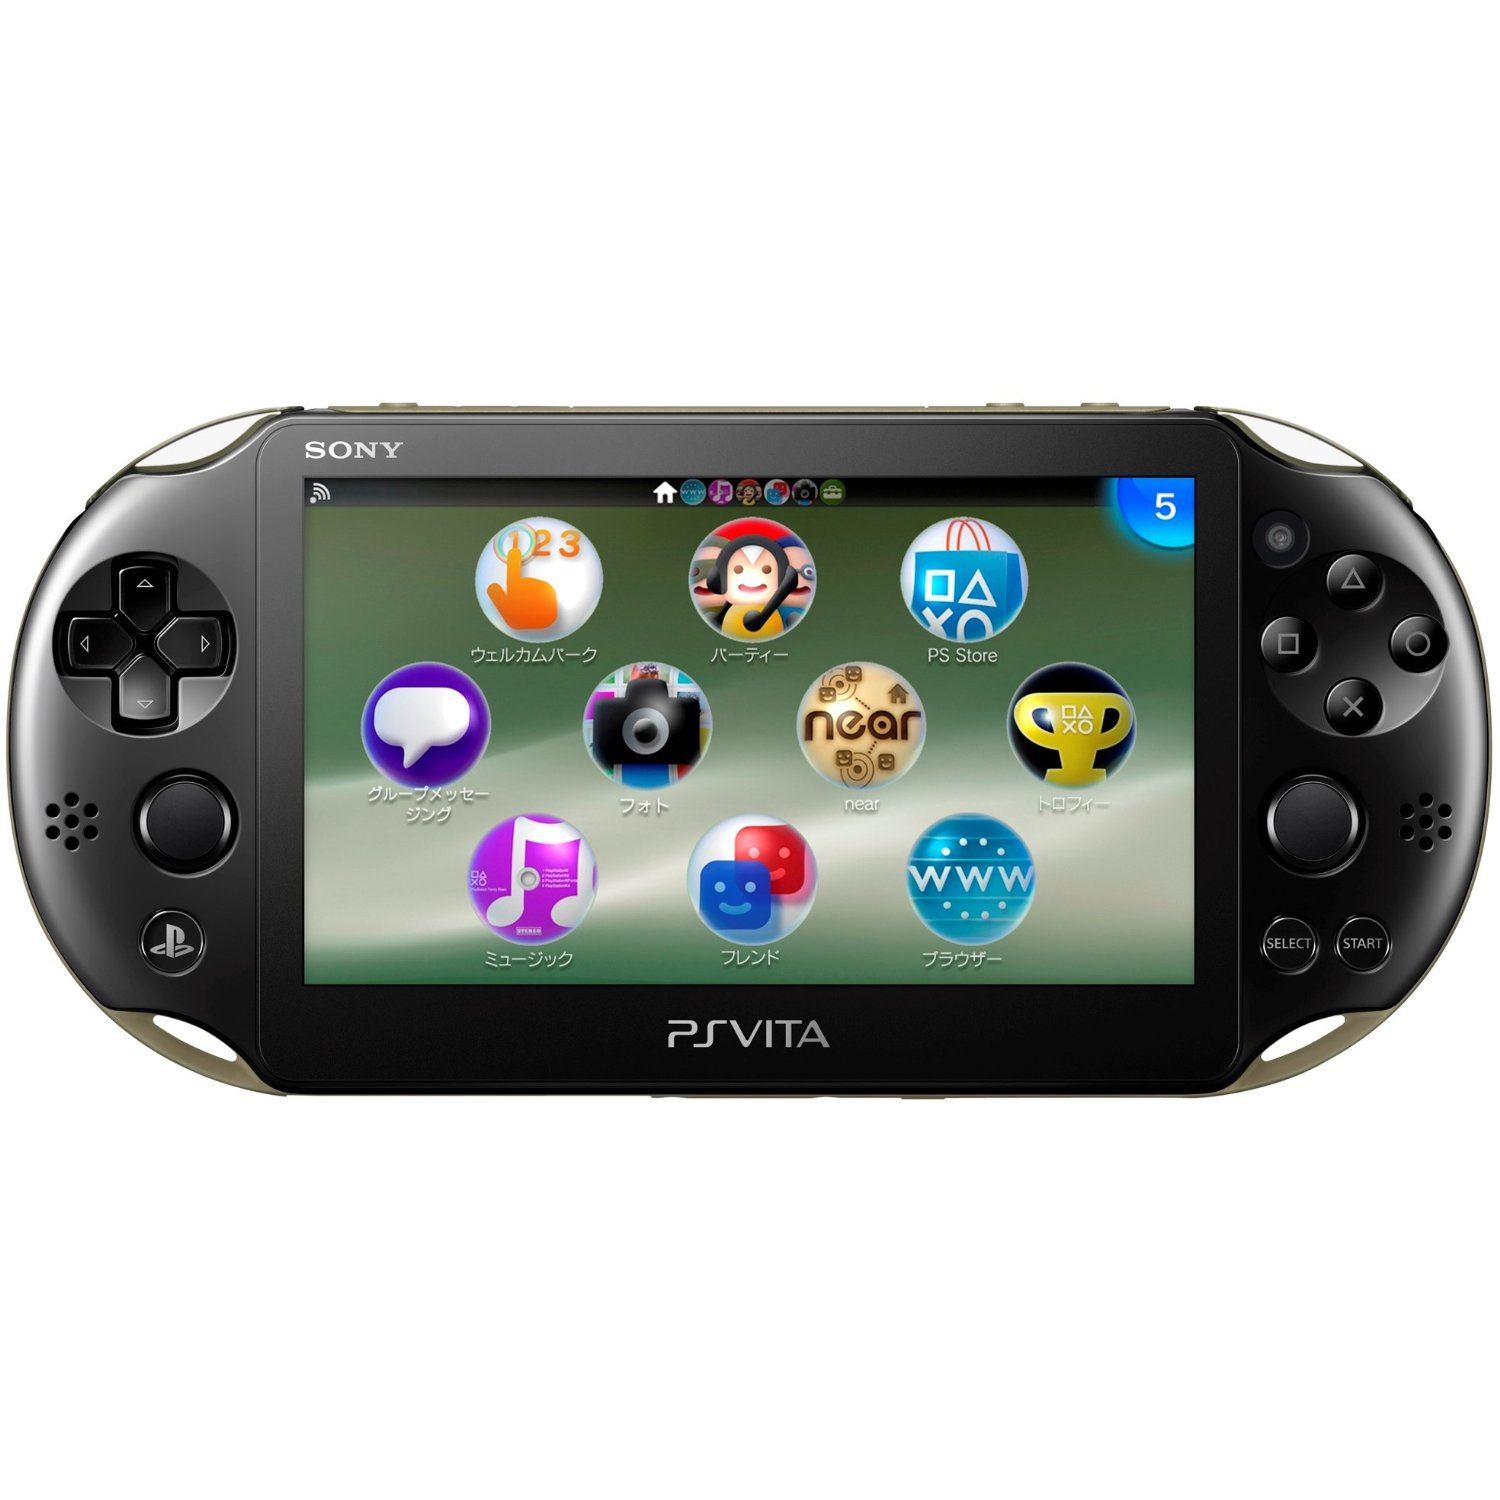 PS Vita PlayStation Vita New Slim Model - PCH-2000 (Khaki Black)